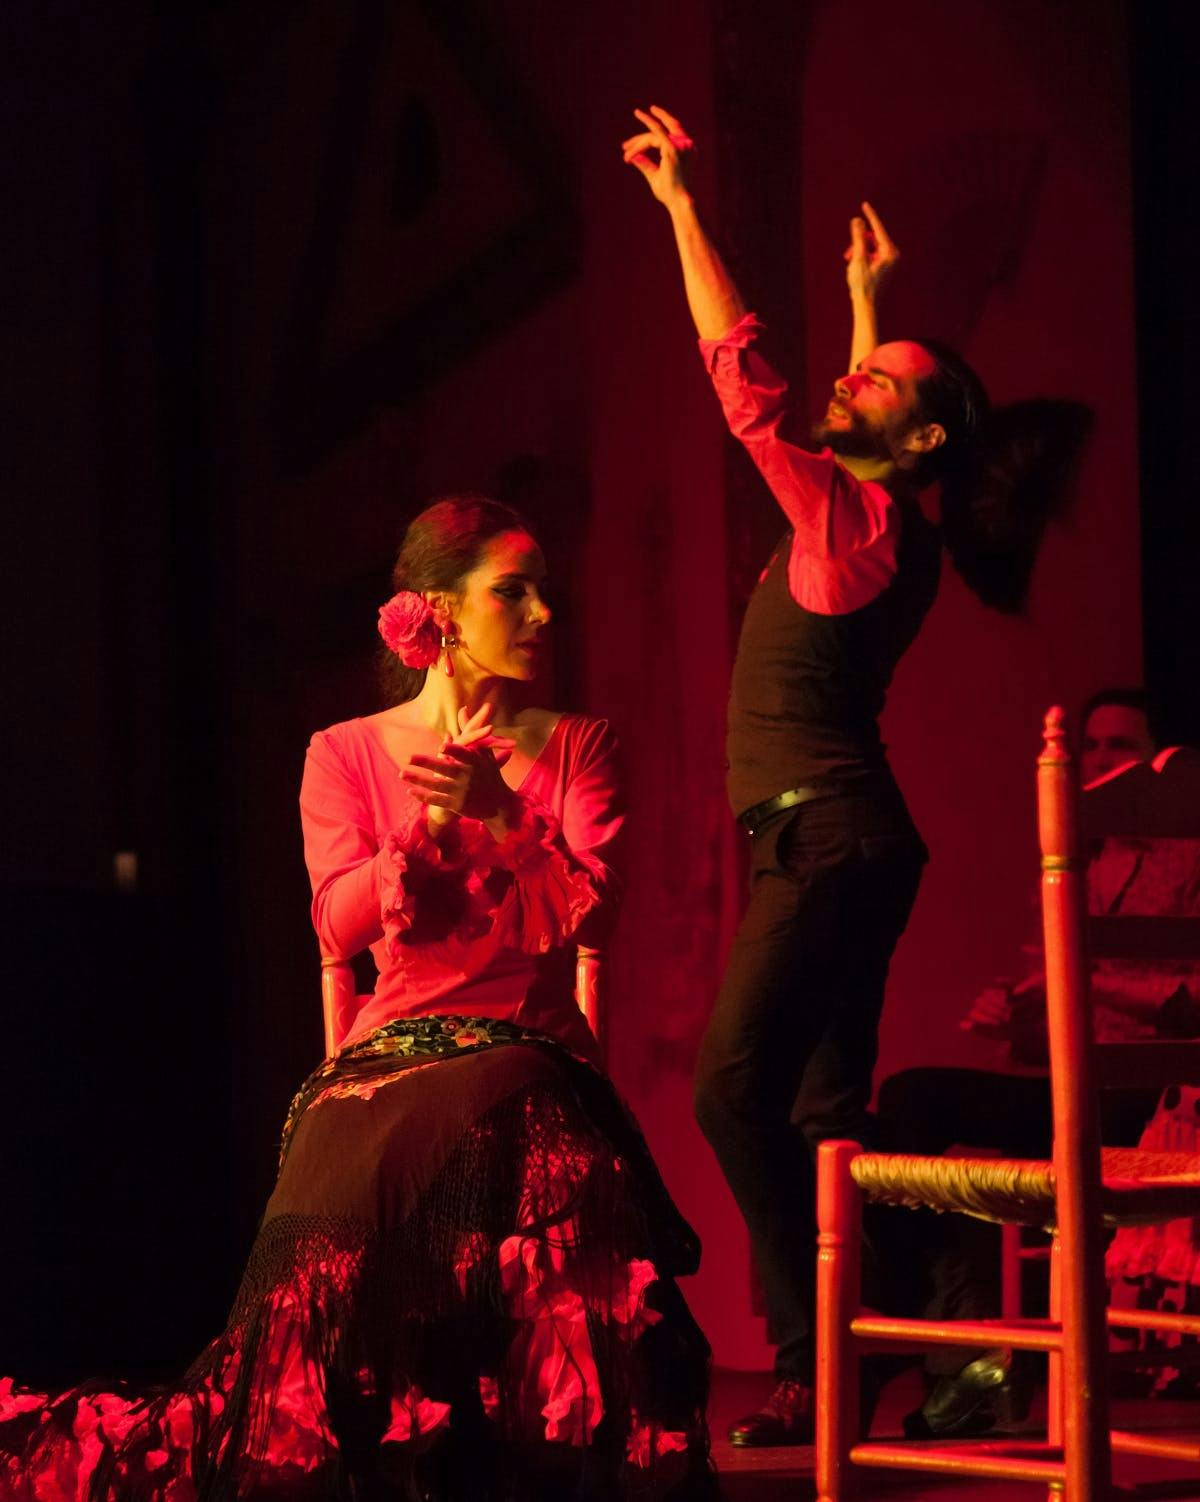 Eintrittskarten für die Flamenco-Show im El Palacio Andaluz